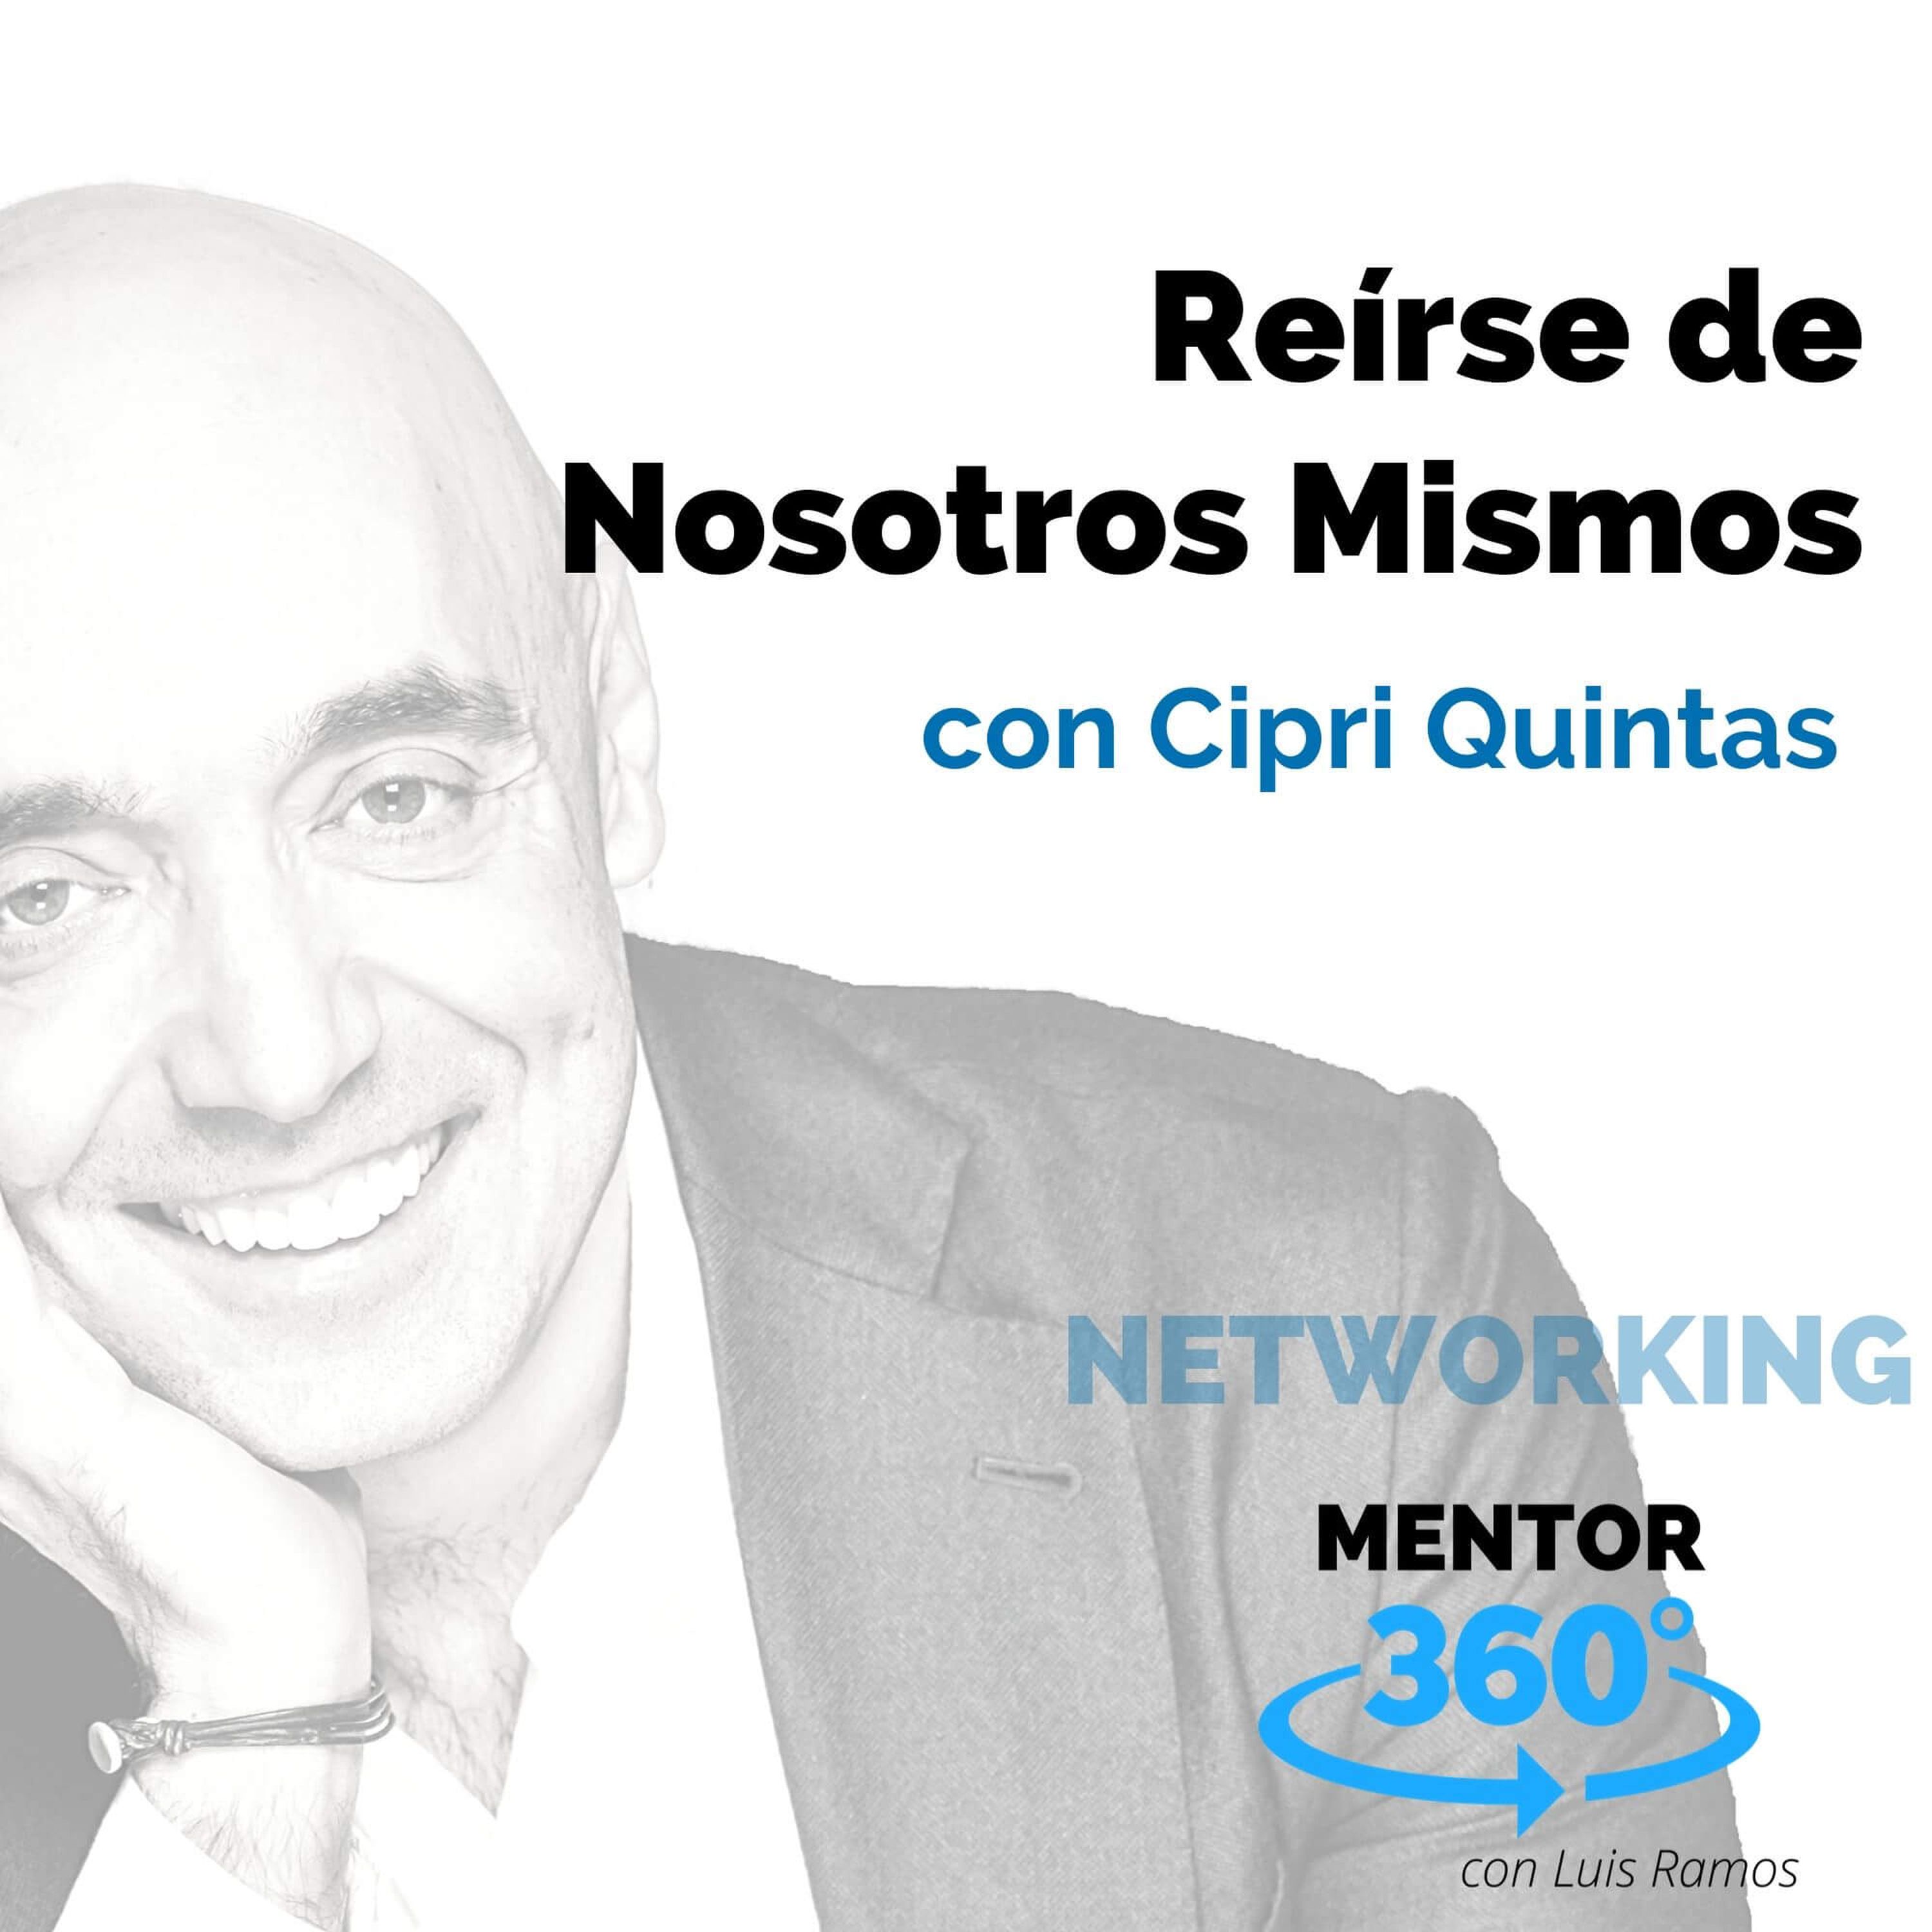 Reirnos de Nosotros Mismos, con Cipri Quintas - NETWORKING - MENTOR360